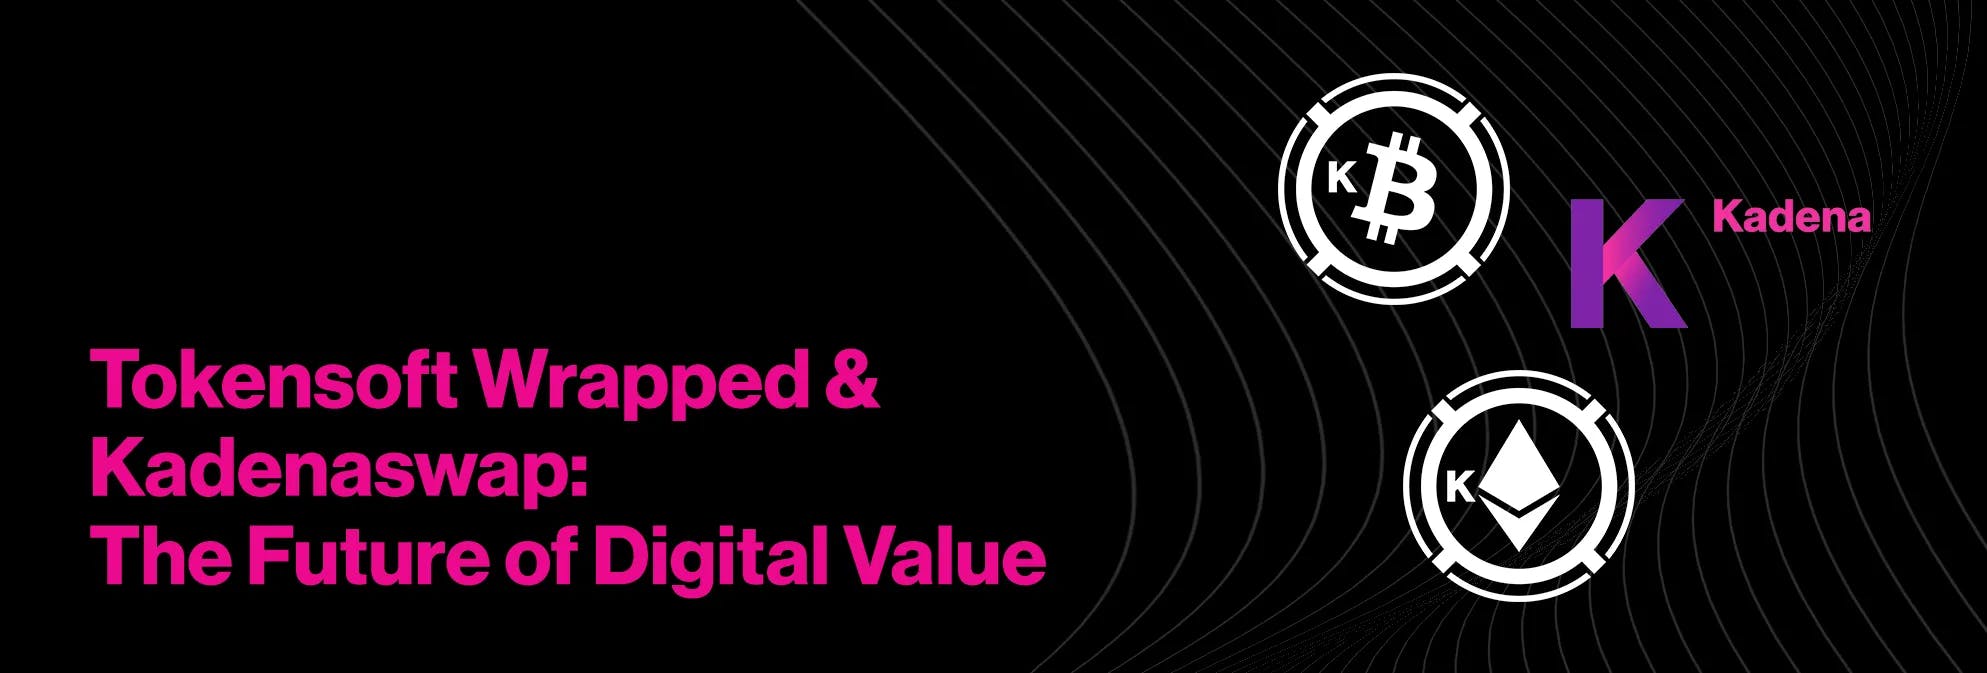 Tokensoft Wrapped & Kadenaswap - the Future of Digital Value